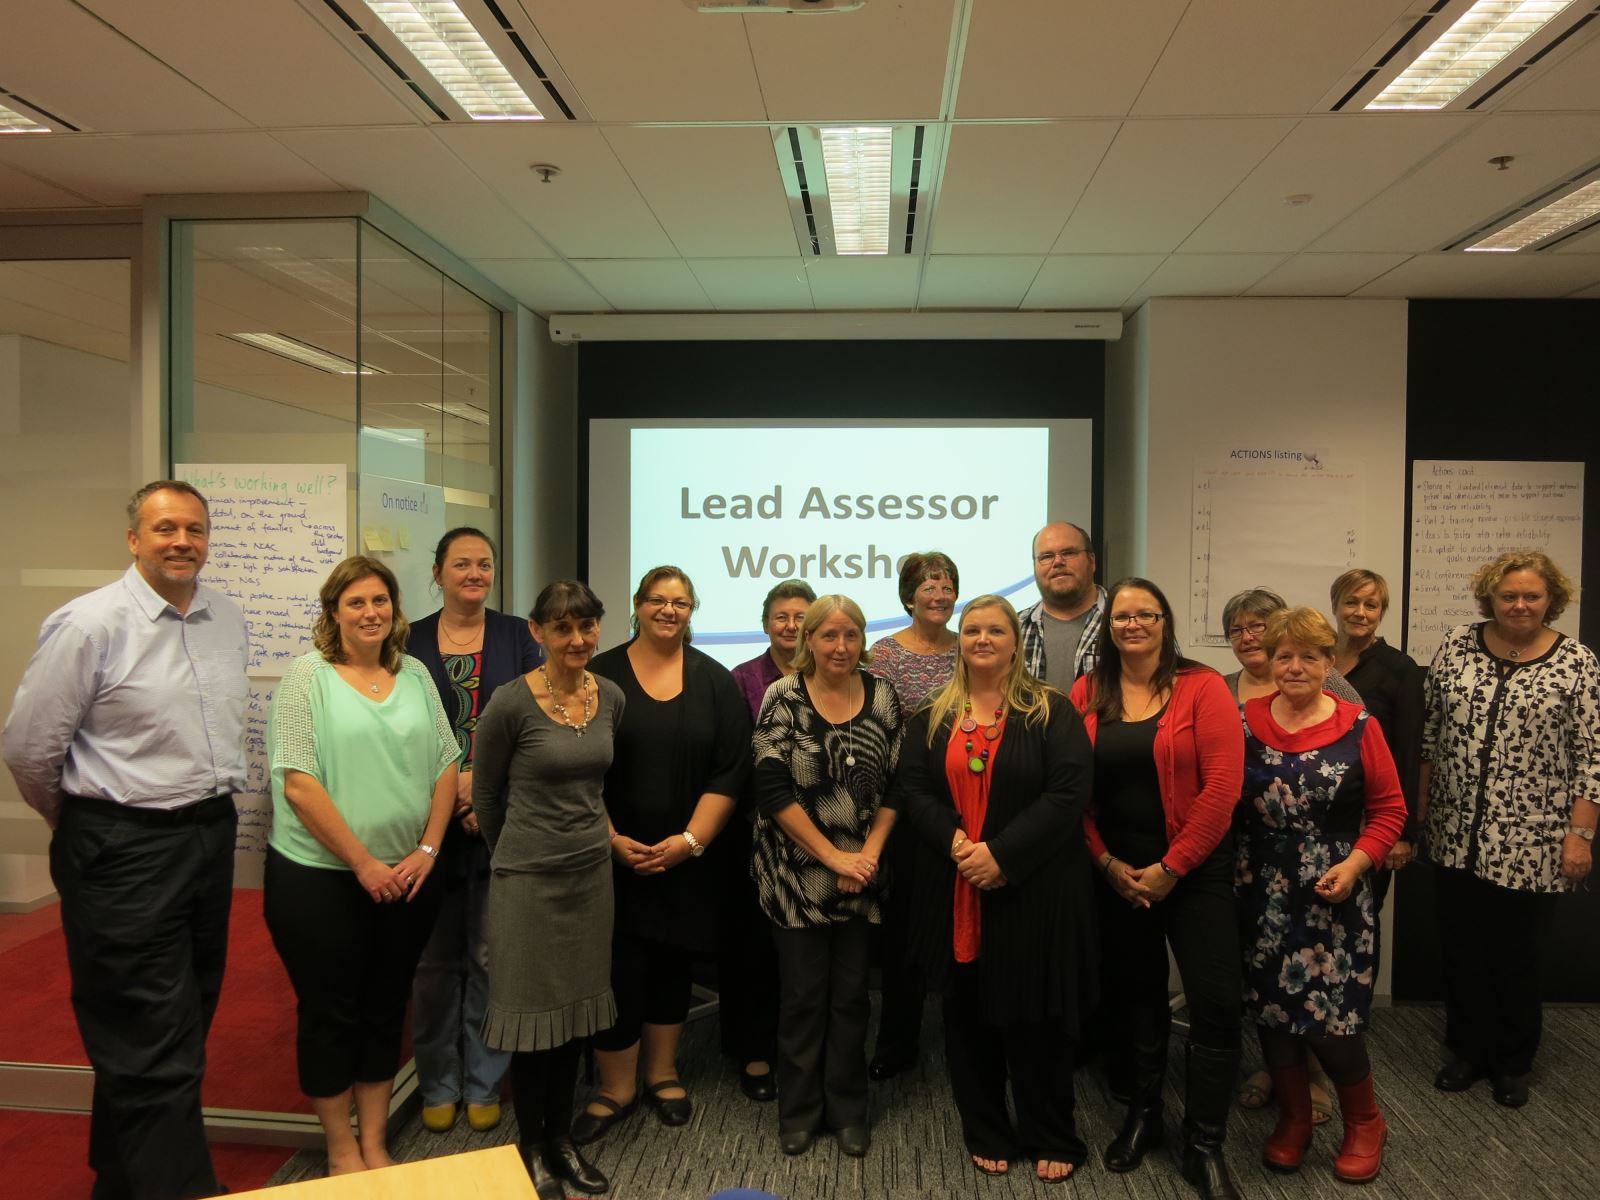 Lead assessor workshop at ACECQA 2014 image